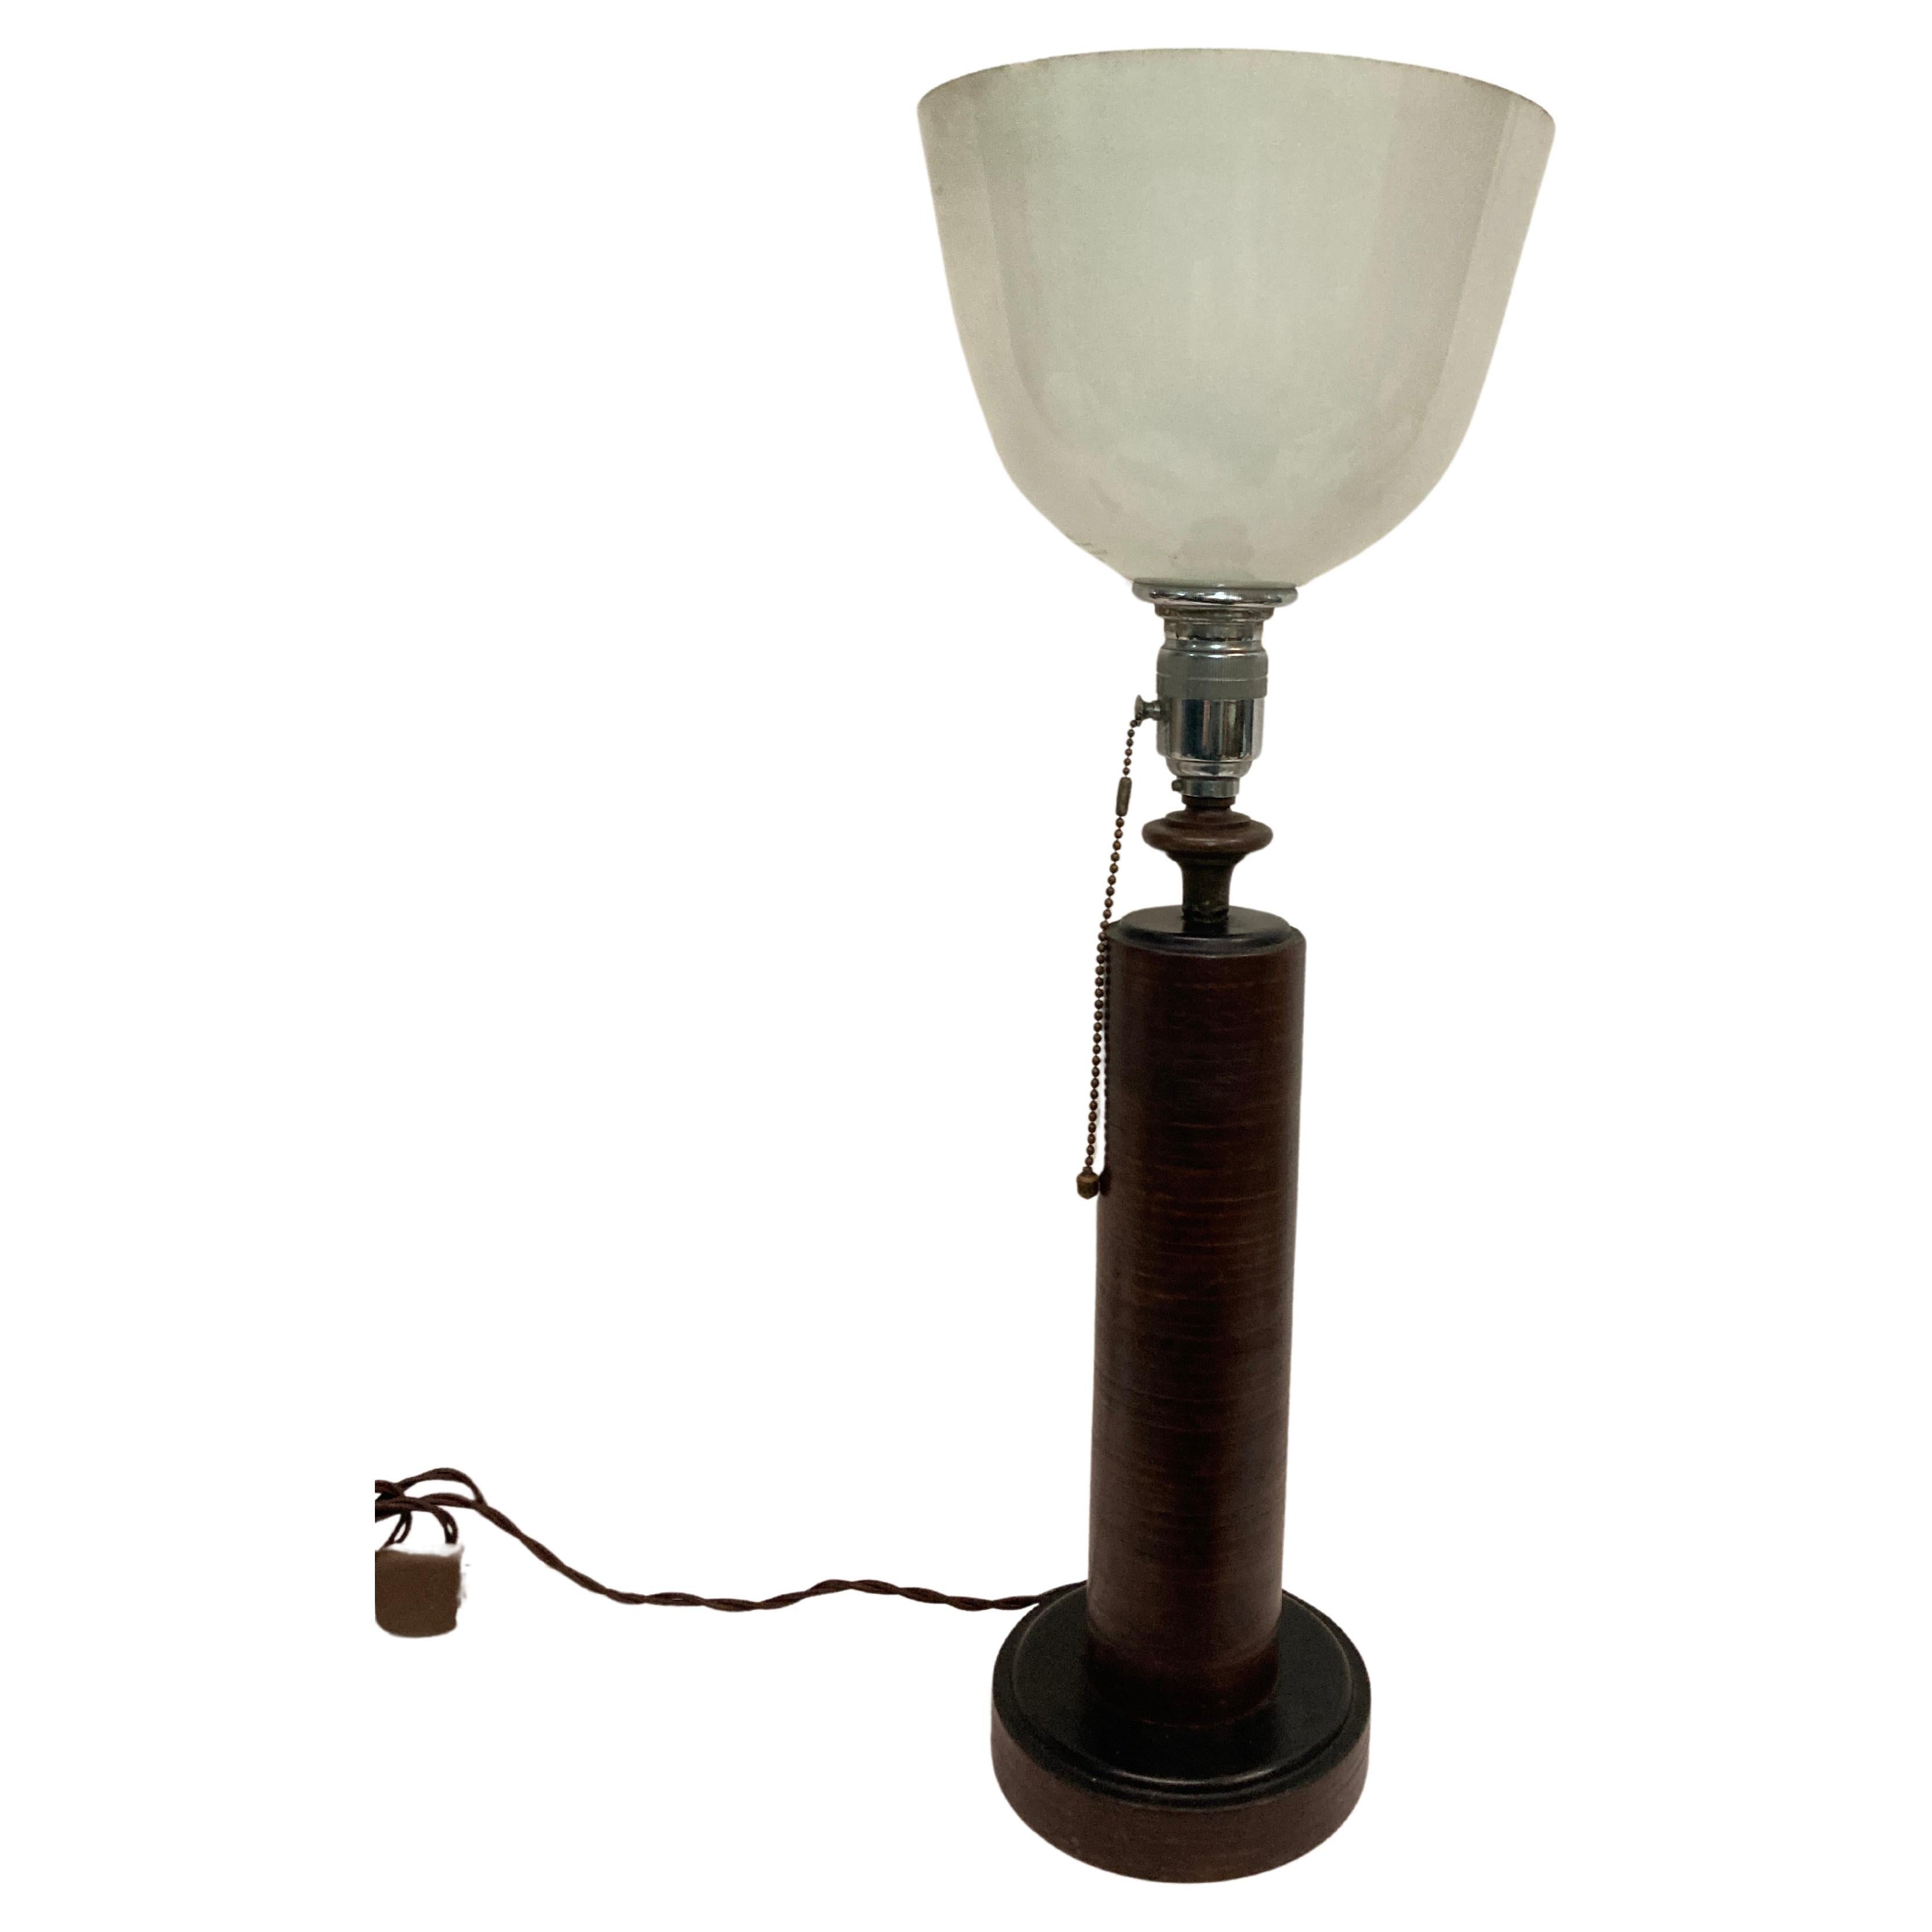 Stitched leather table lamp by Paul Dupré-Lafon for Hermès